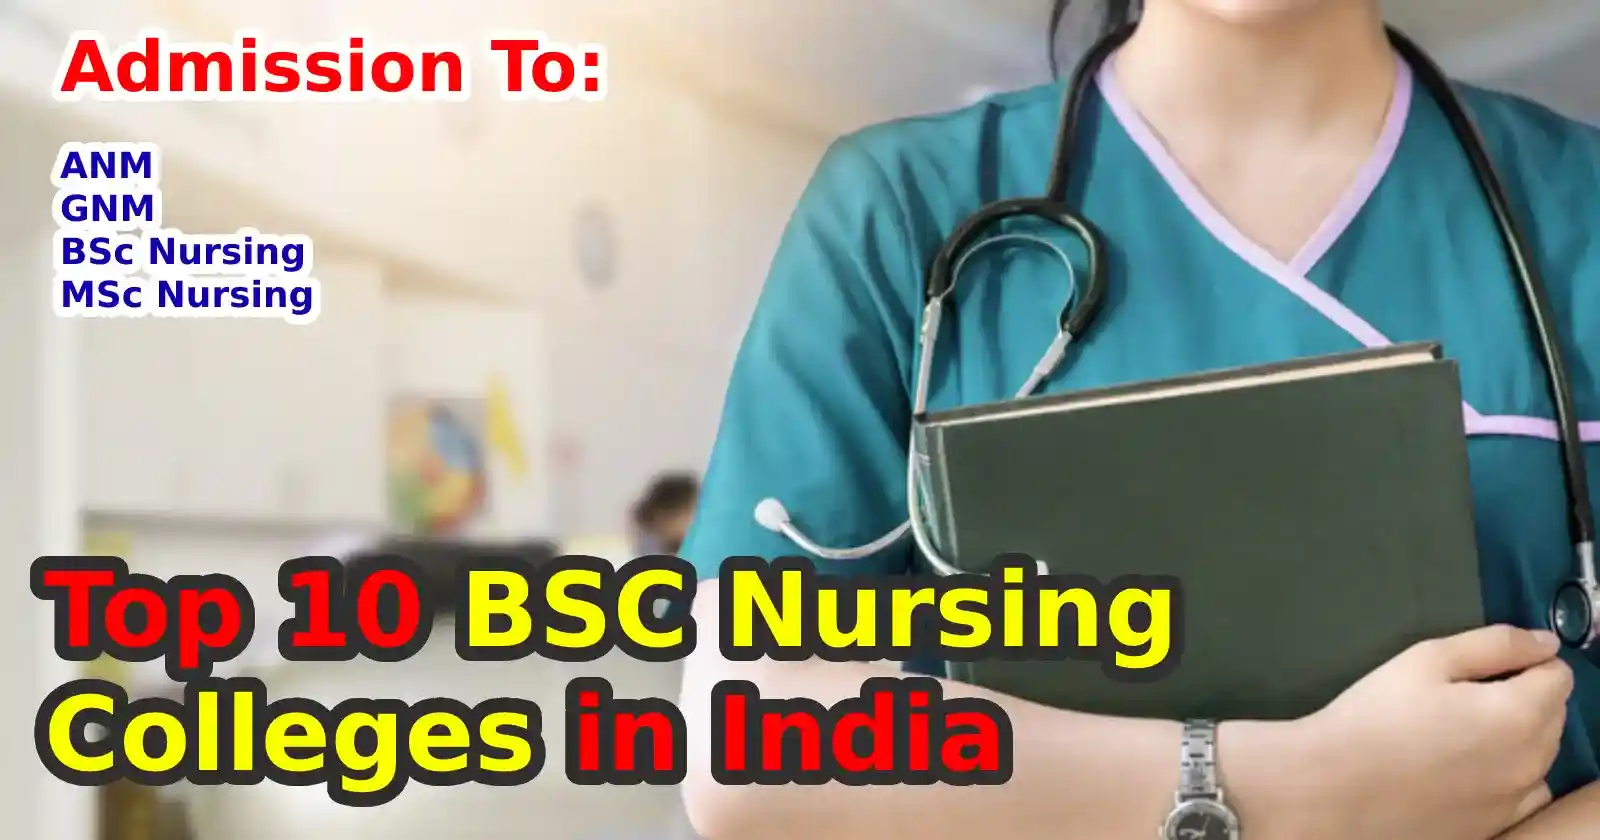 Top 10 BSC Nursing College List